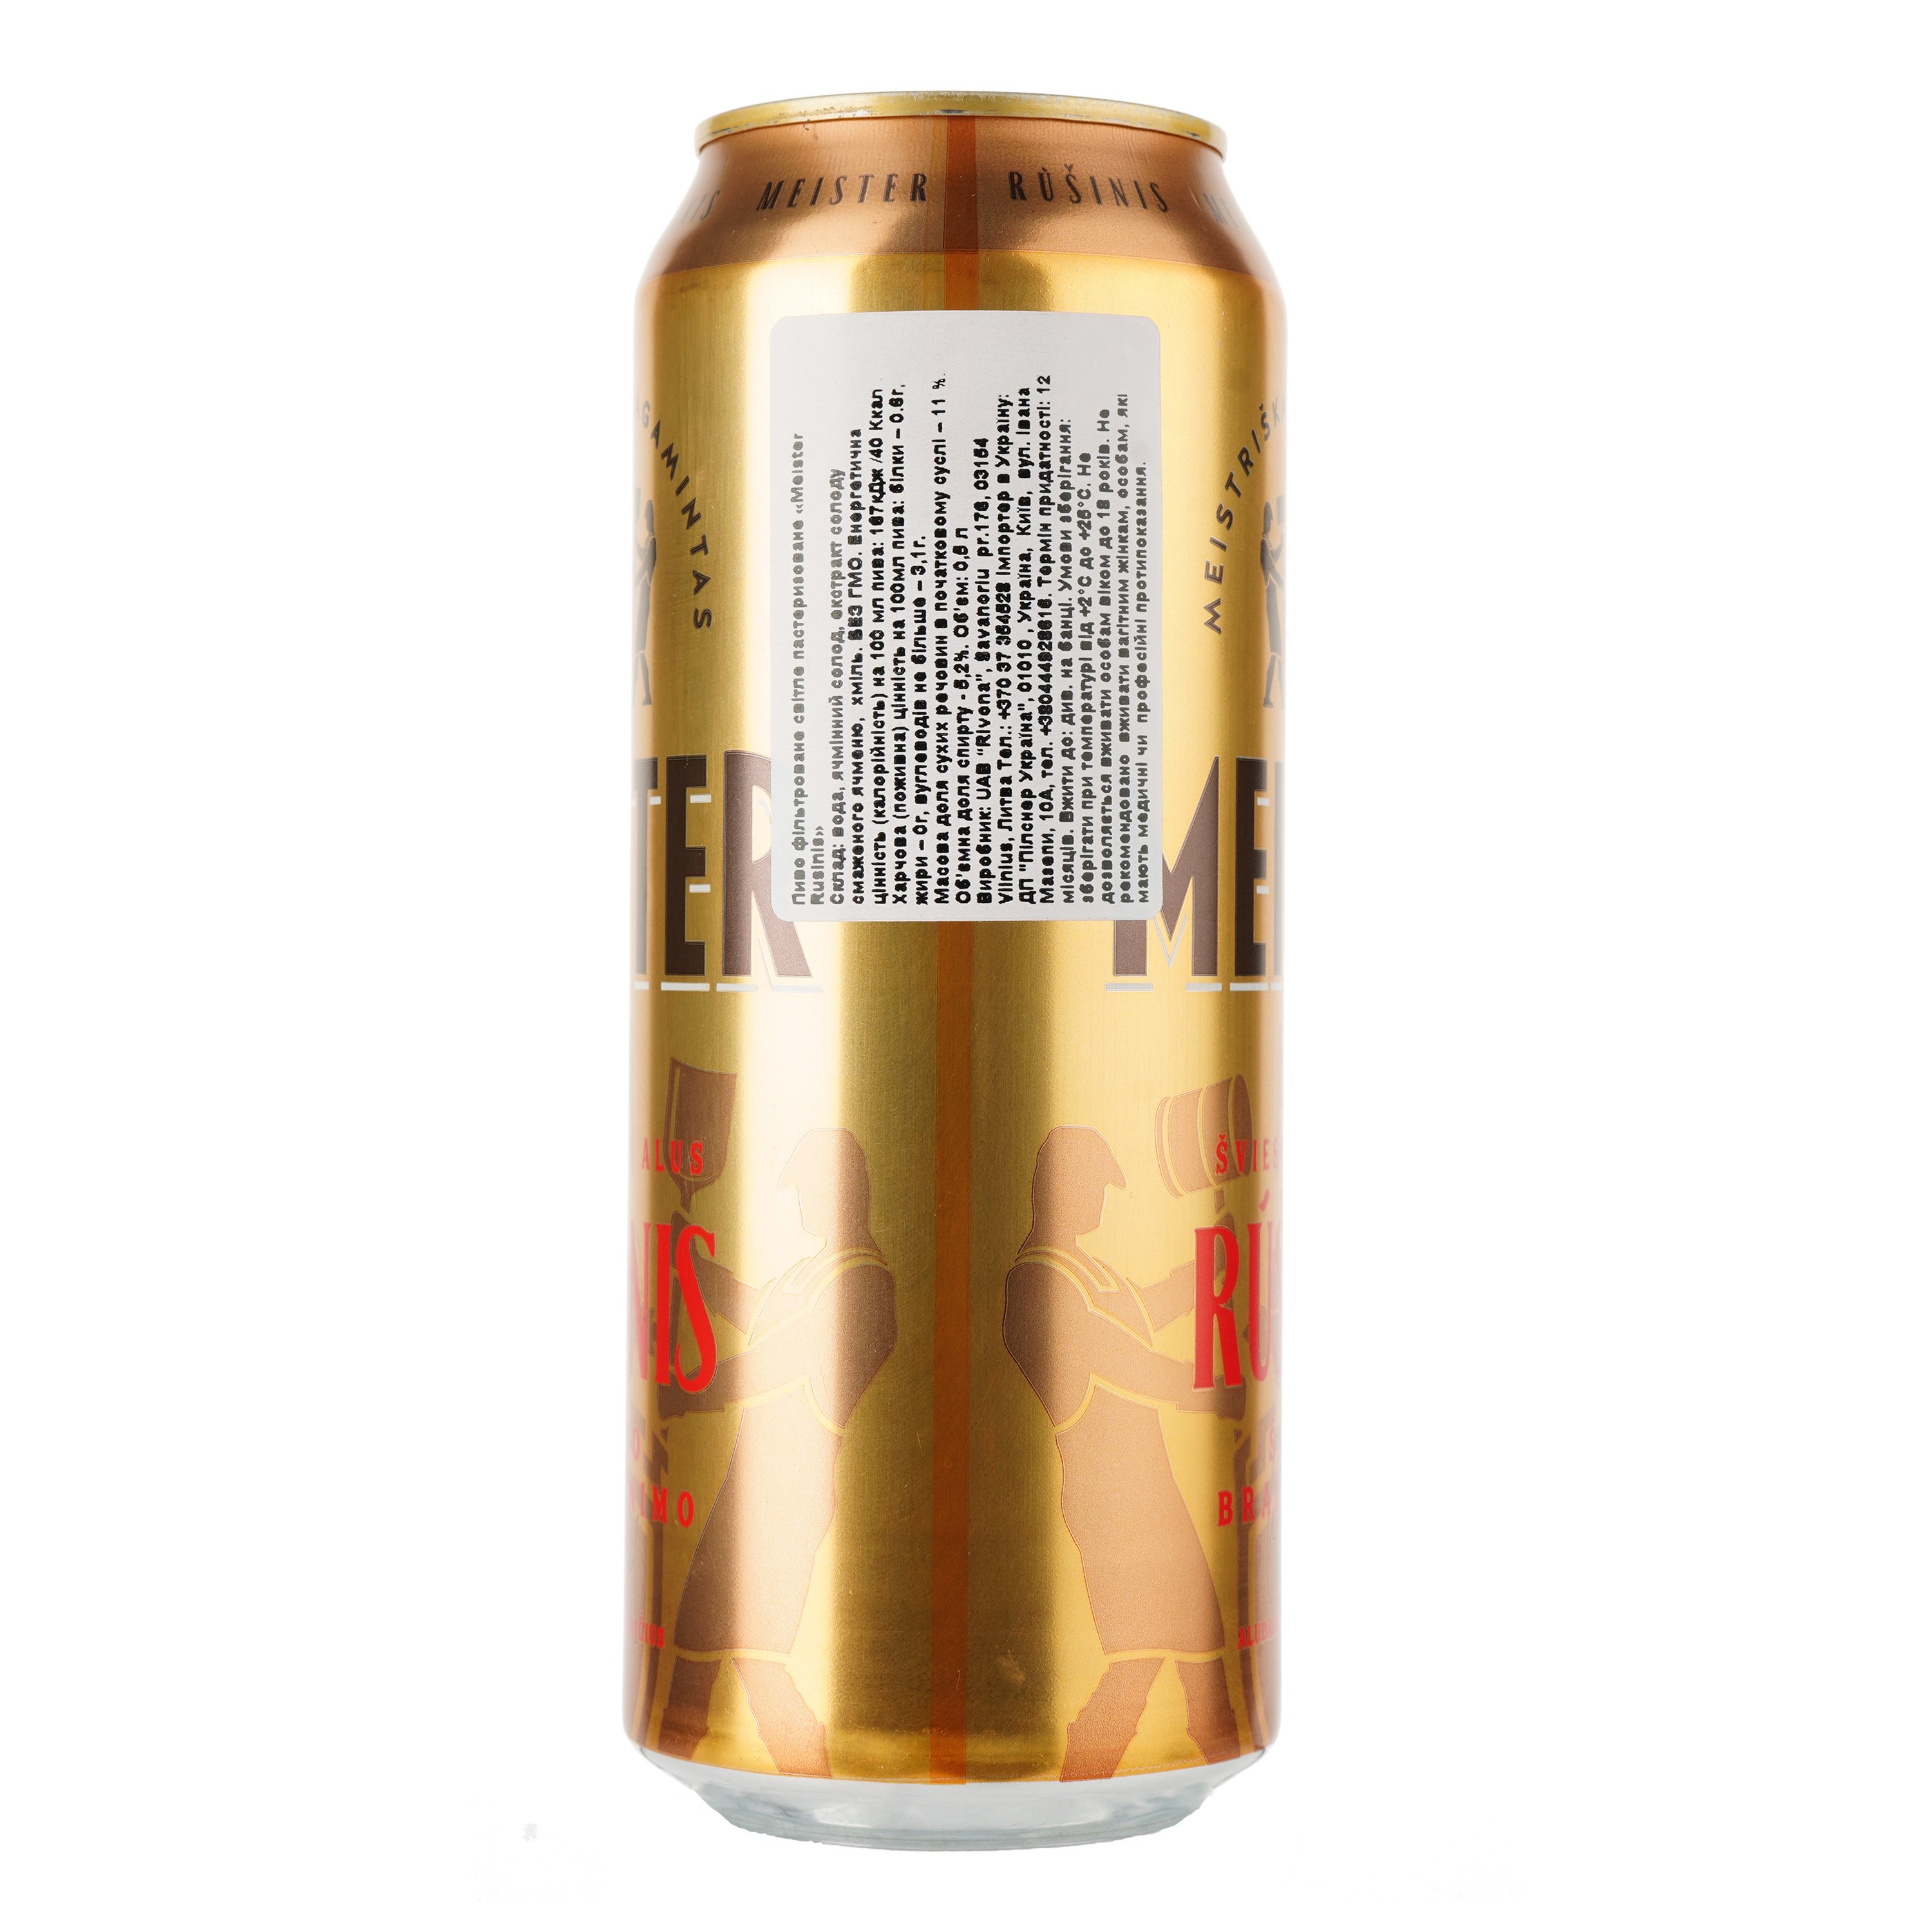 Пиво Meister Rusinis світле, 5.2%, з/б, 0.5 л - фото 2